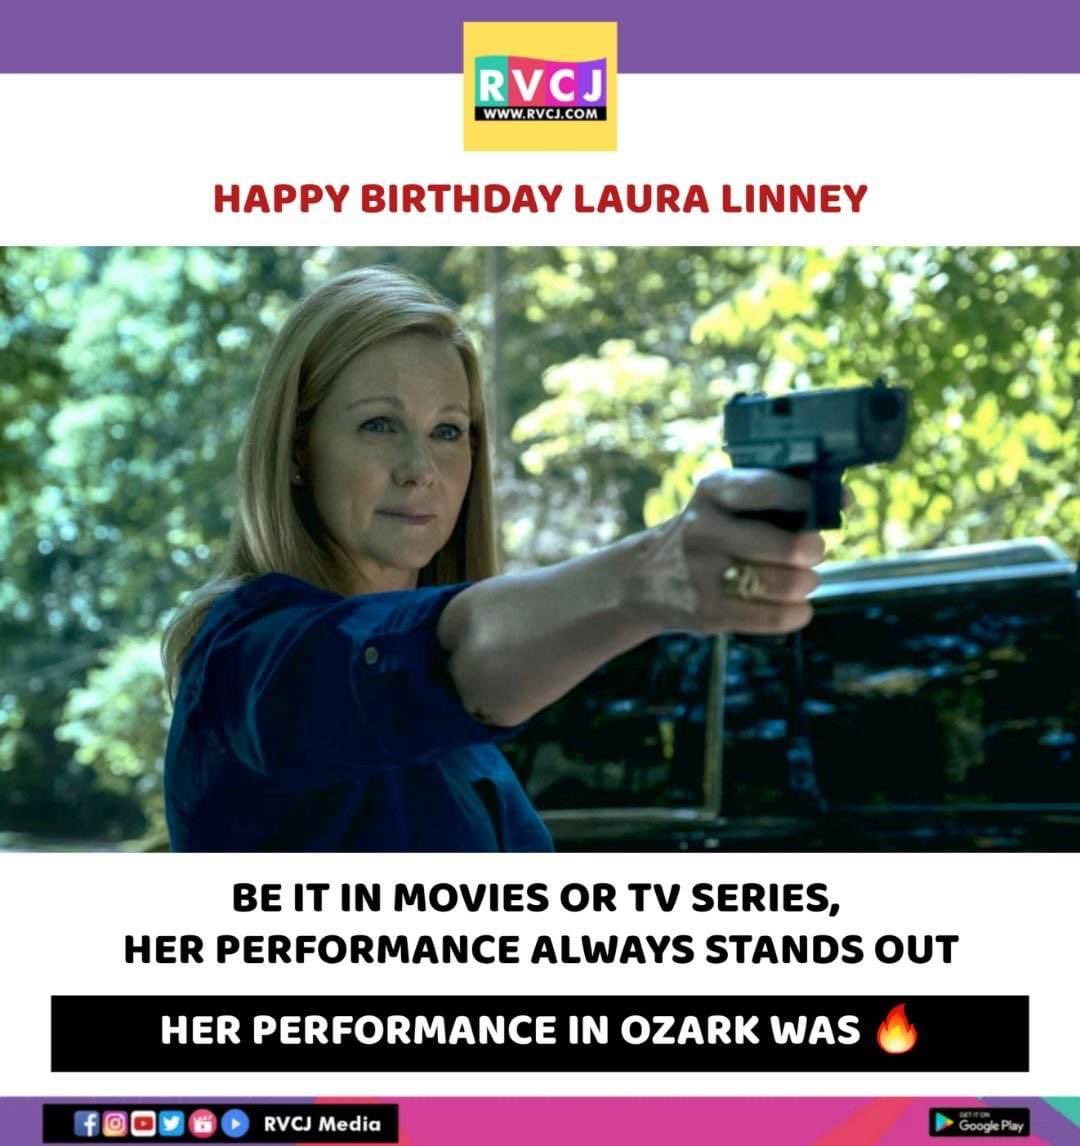 Happy Birthday Laura Linney!

#lauralinney #ozark #hollywood #actress #rvcjmovies